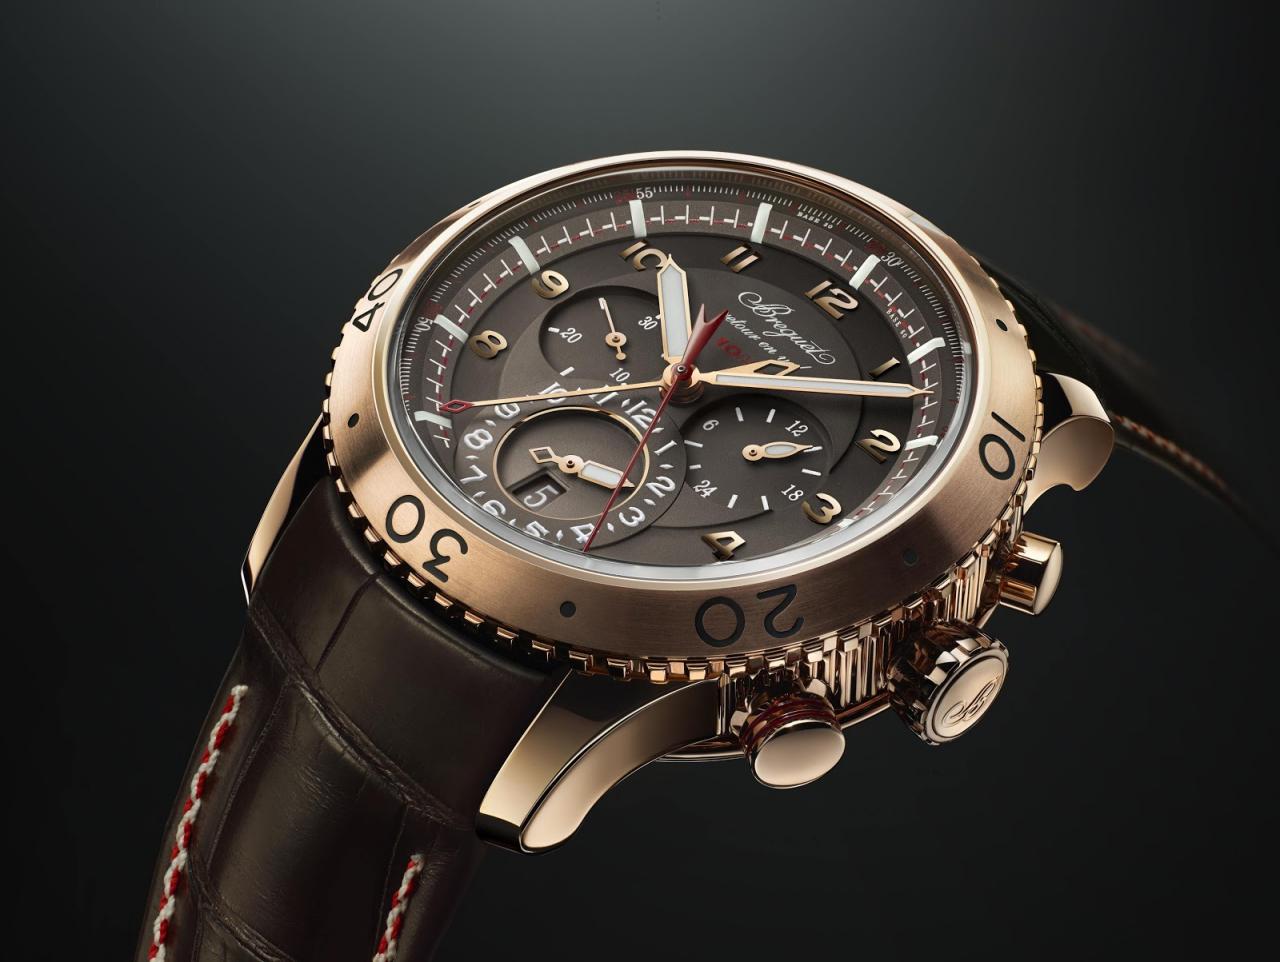 Breguet Type XXII 3880 replica watch